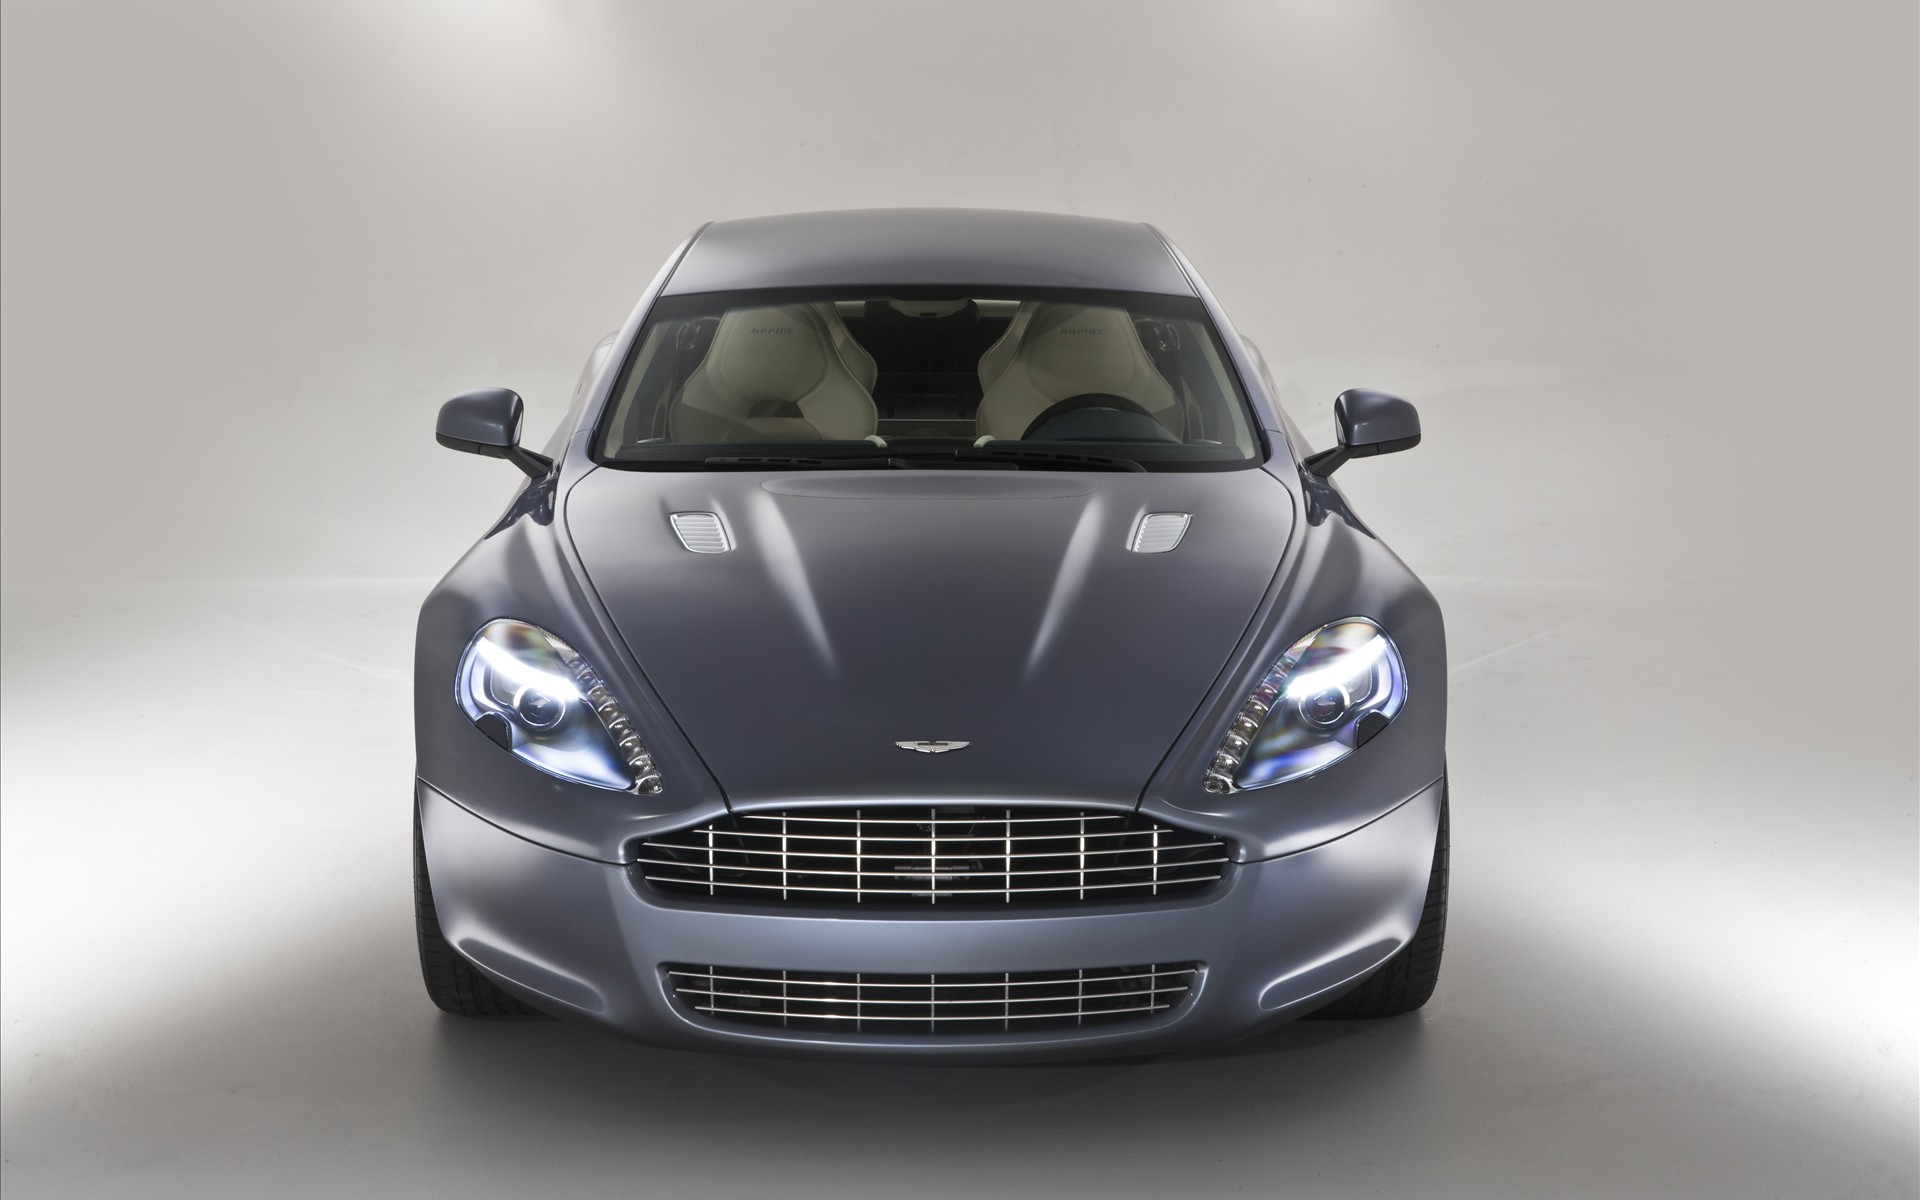 Download HQ Aston Martin wallpaper / Cars / 1920x1200